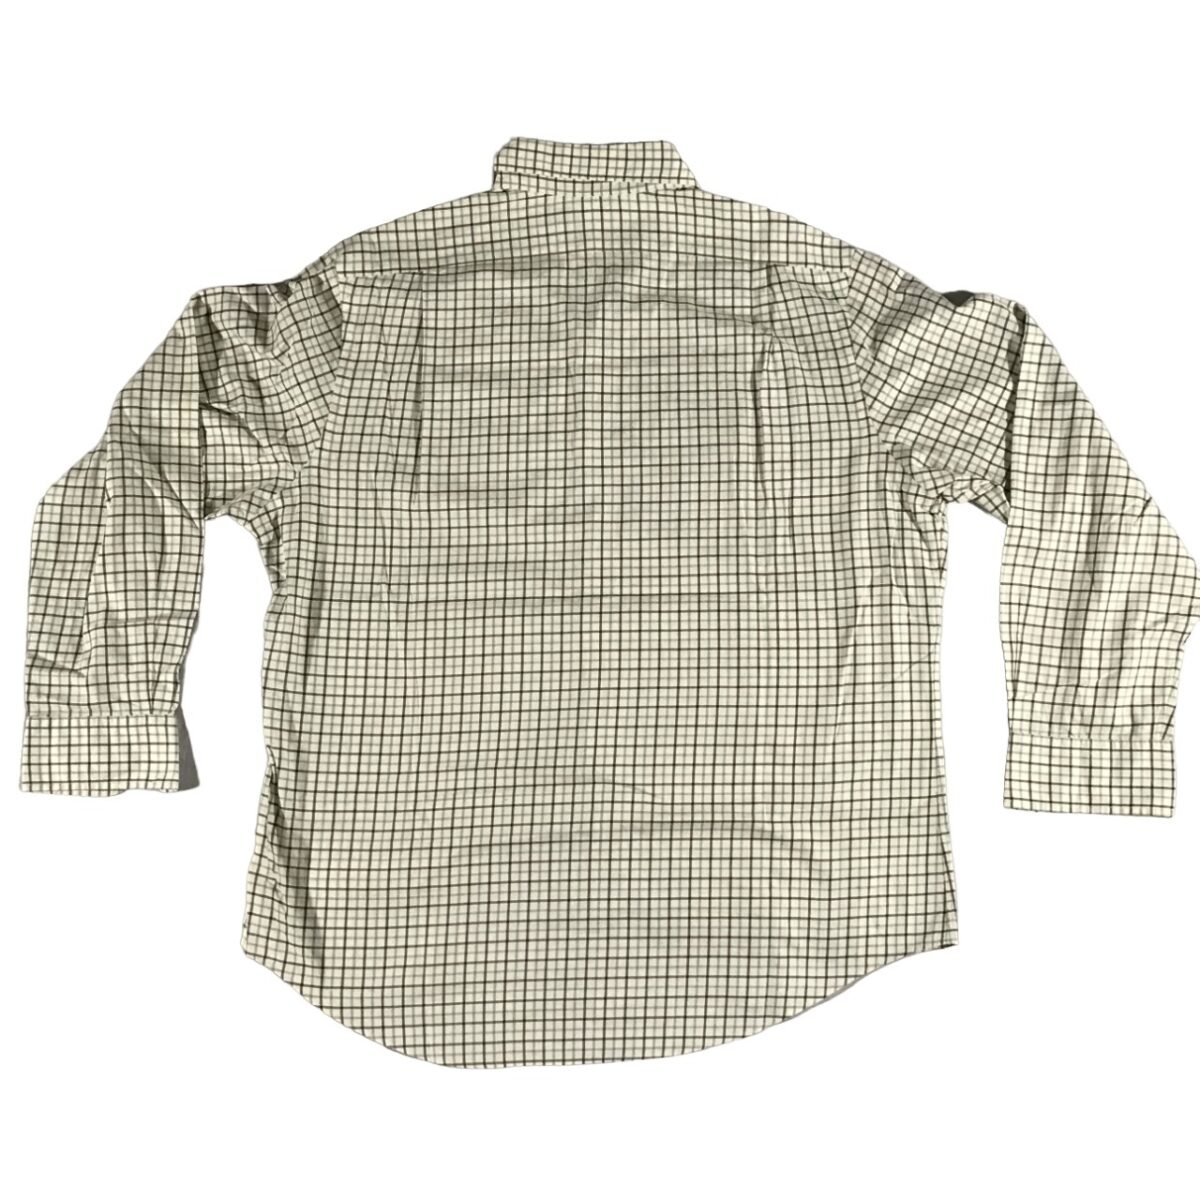 Shirt Polo Ralph Lauren white brown green squares